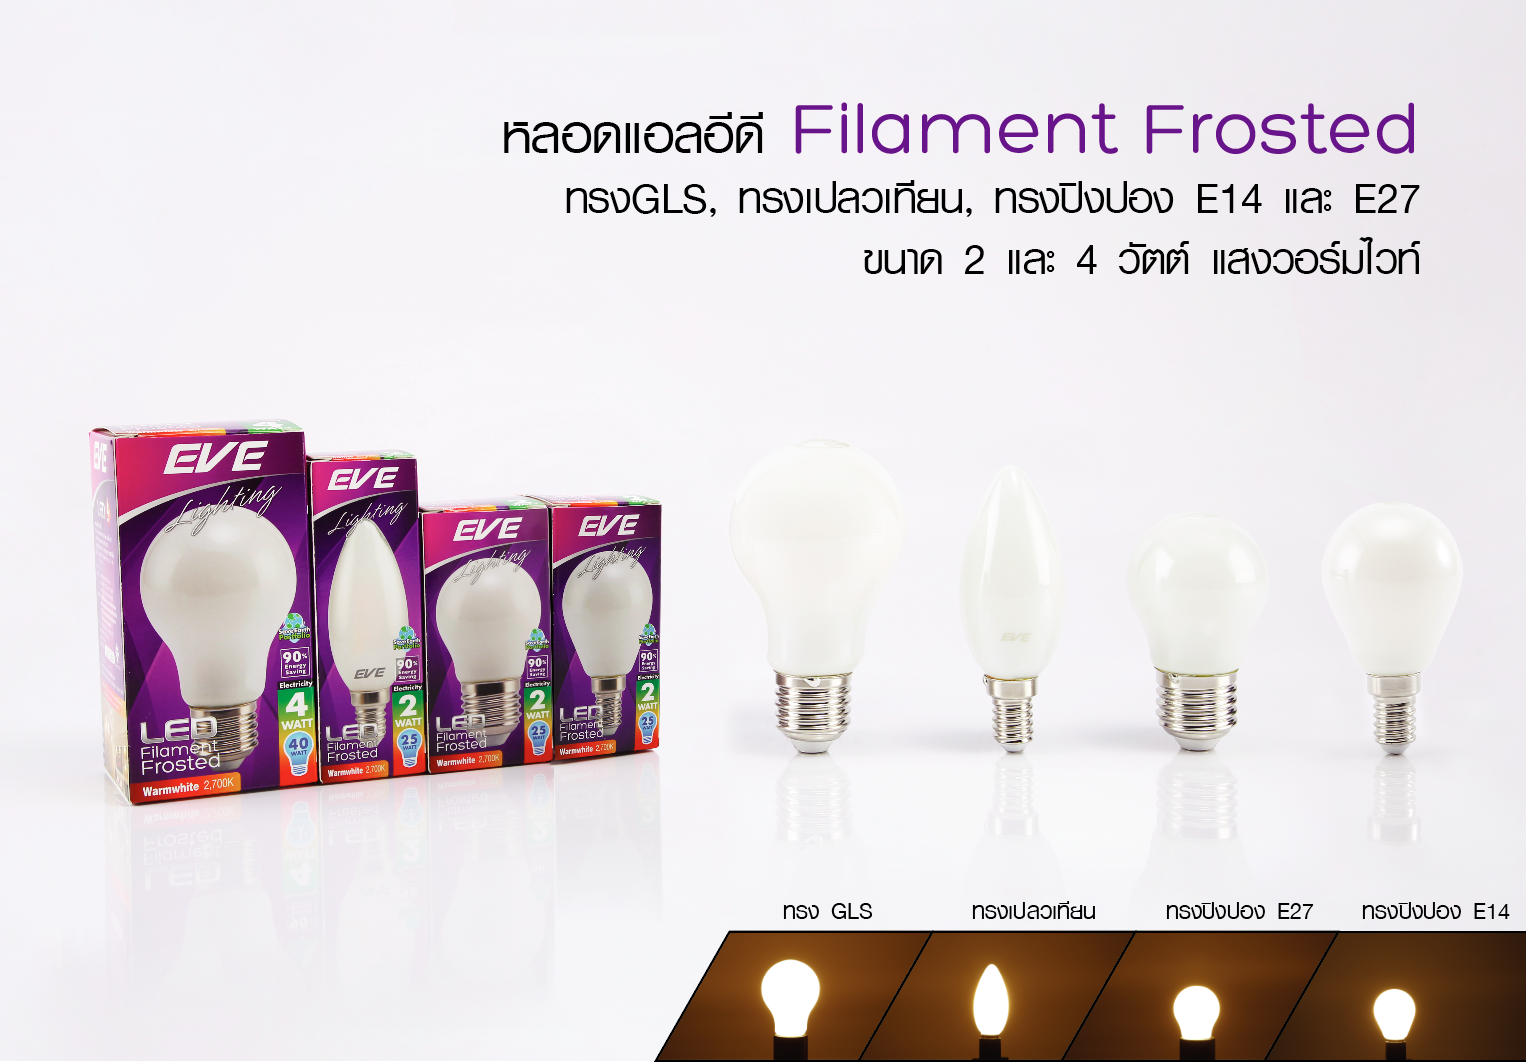 LED Filament Frosted 2w E14/E27 หลอดแอลอีดี ฟิลาเมนต์ แก้วขุ่น ขนาด 2 วัตต์ แสงเหลืองวอร์มไวท์ ขั้วE14 และ E27 แสงออกเต็มไม่เกิดเงาใต้หลอด